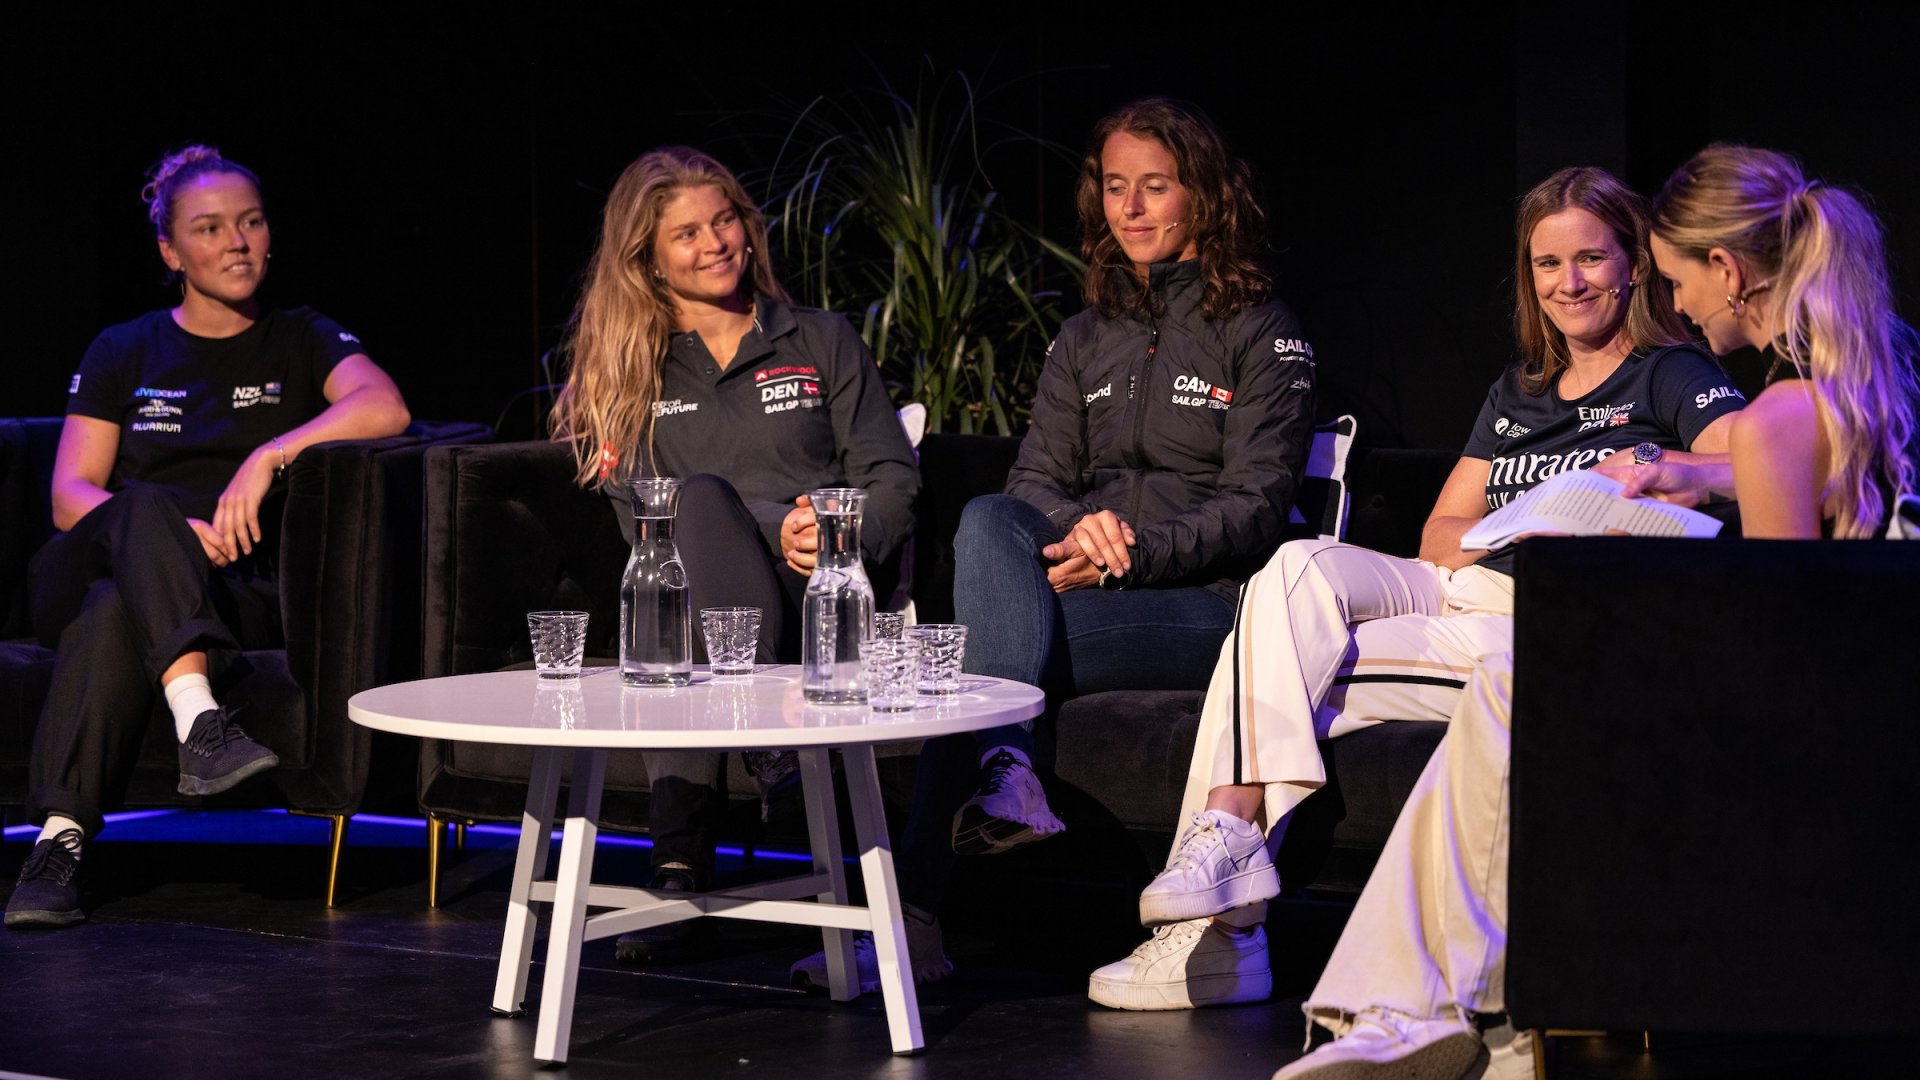 WATCH: SailGP’s Women’s Pathway sailors inspire aspiring female athletes at Breaking Boundaries forum  